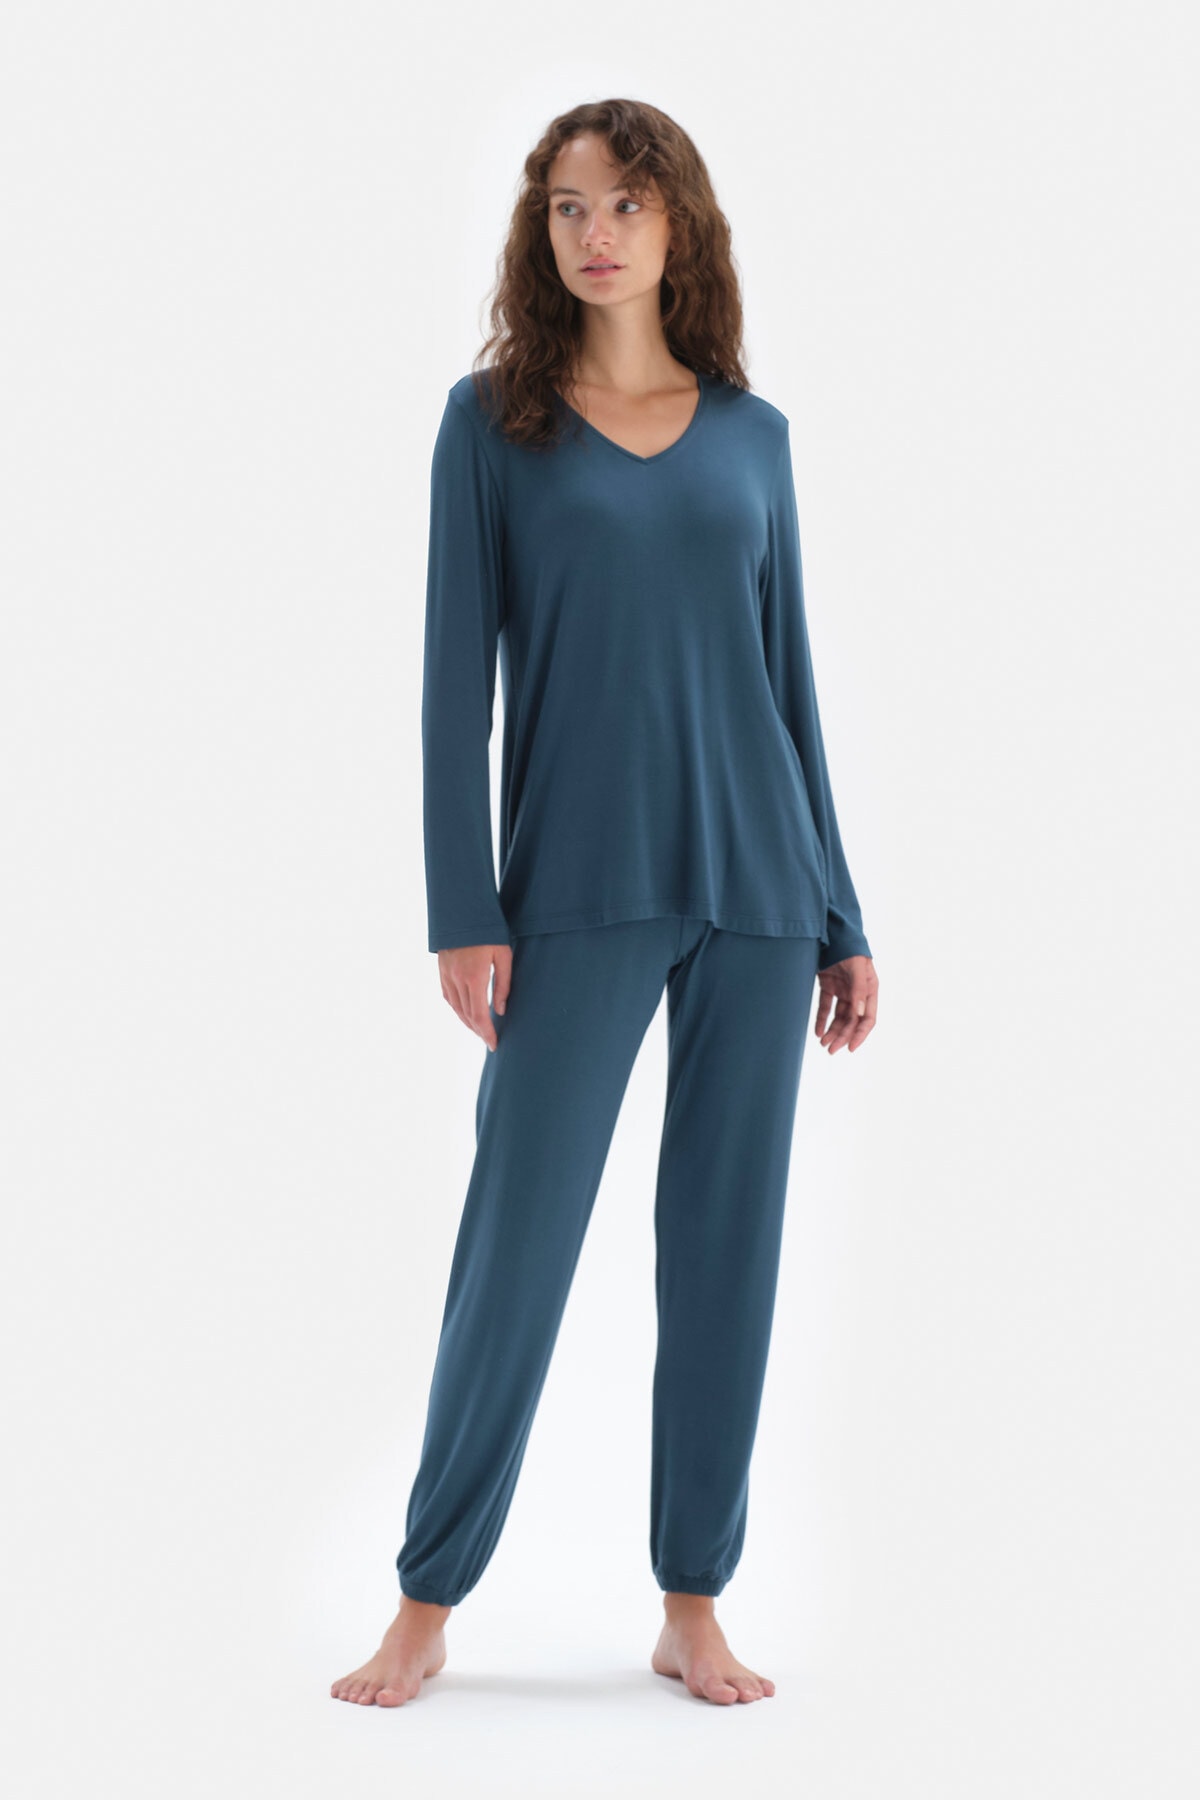 Dagi Oil Blue V-Neck Long Sleeve Piping Detailed Top Jogger Pajamas Set